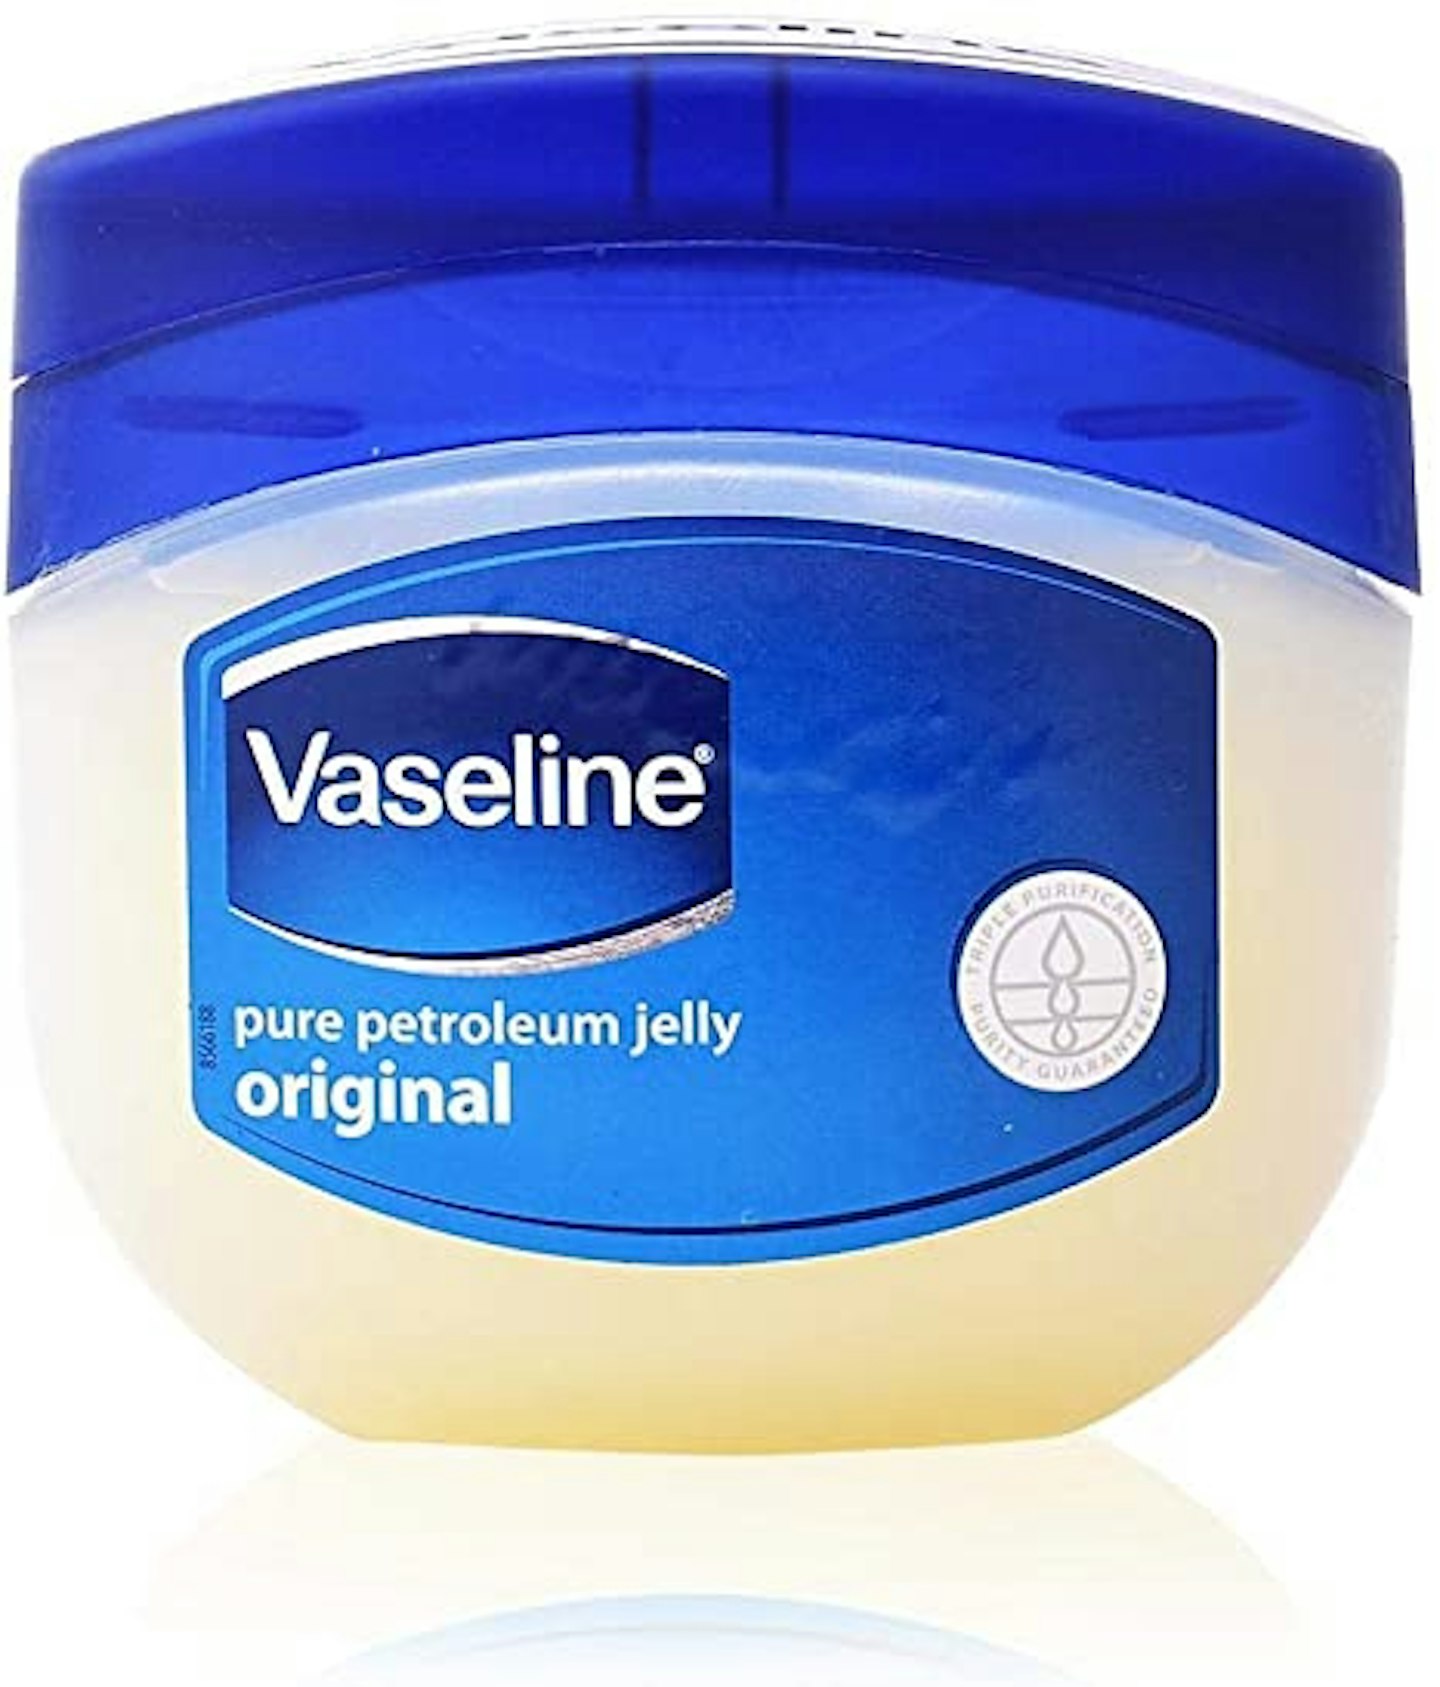 Vaseline Original Petroleum Jelly, £2.99